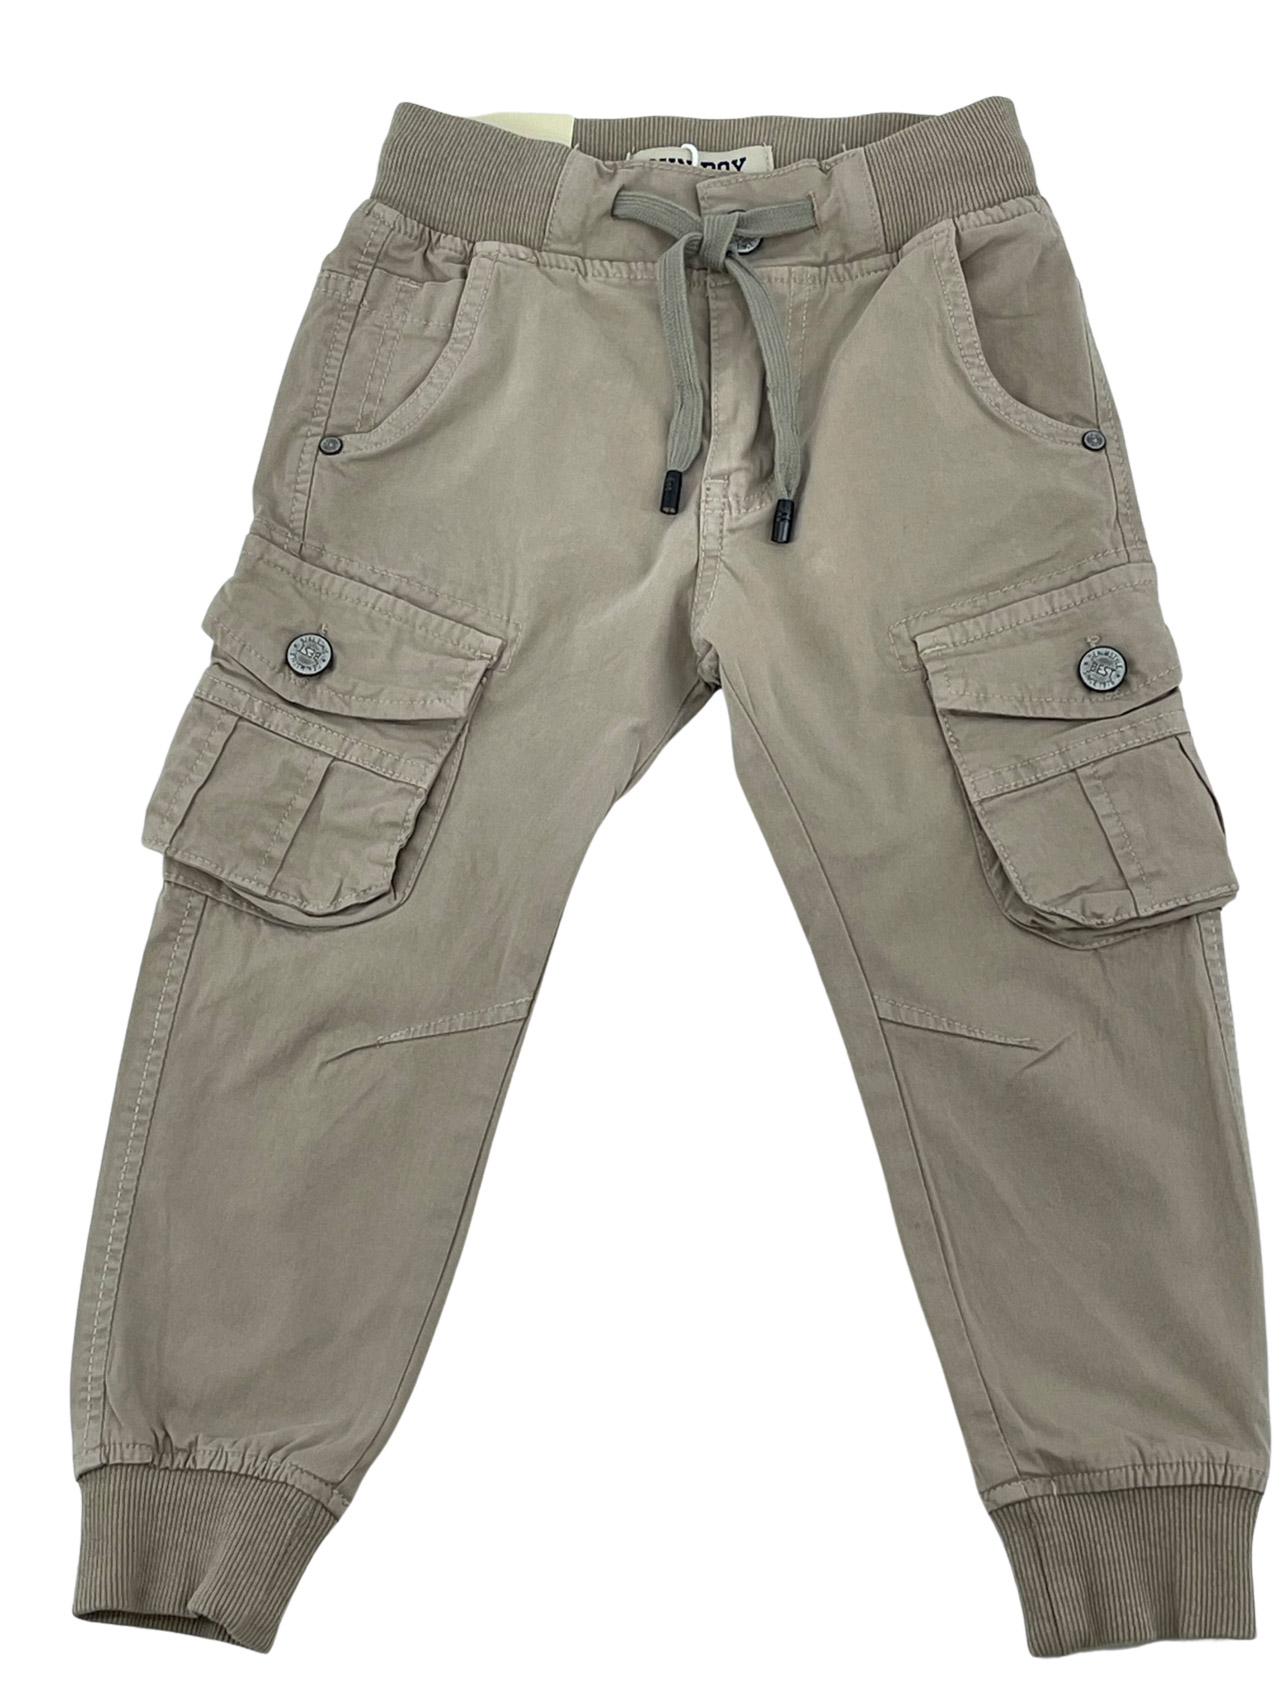 Pants cargo pants, code G204